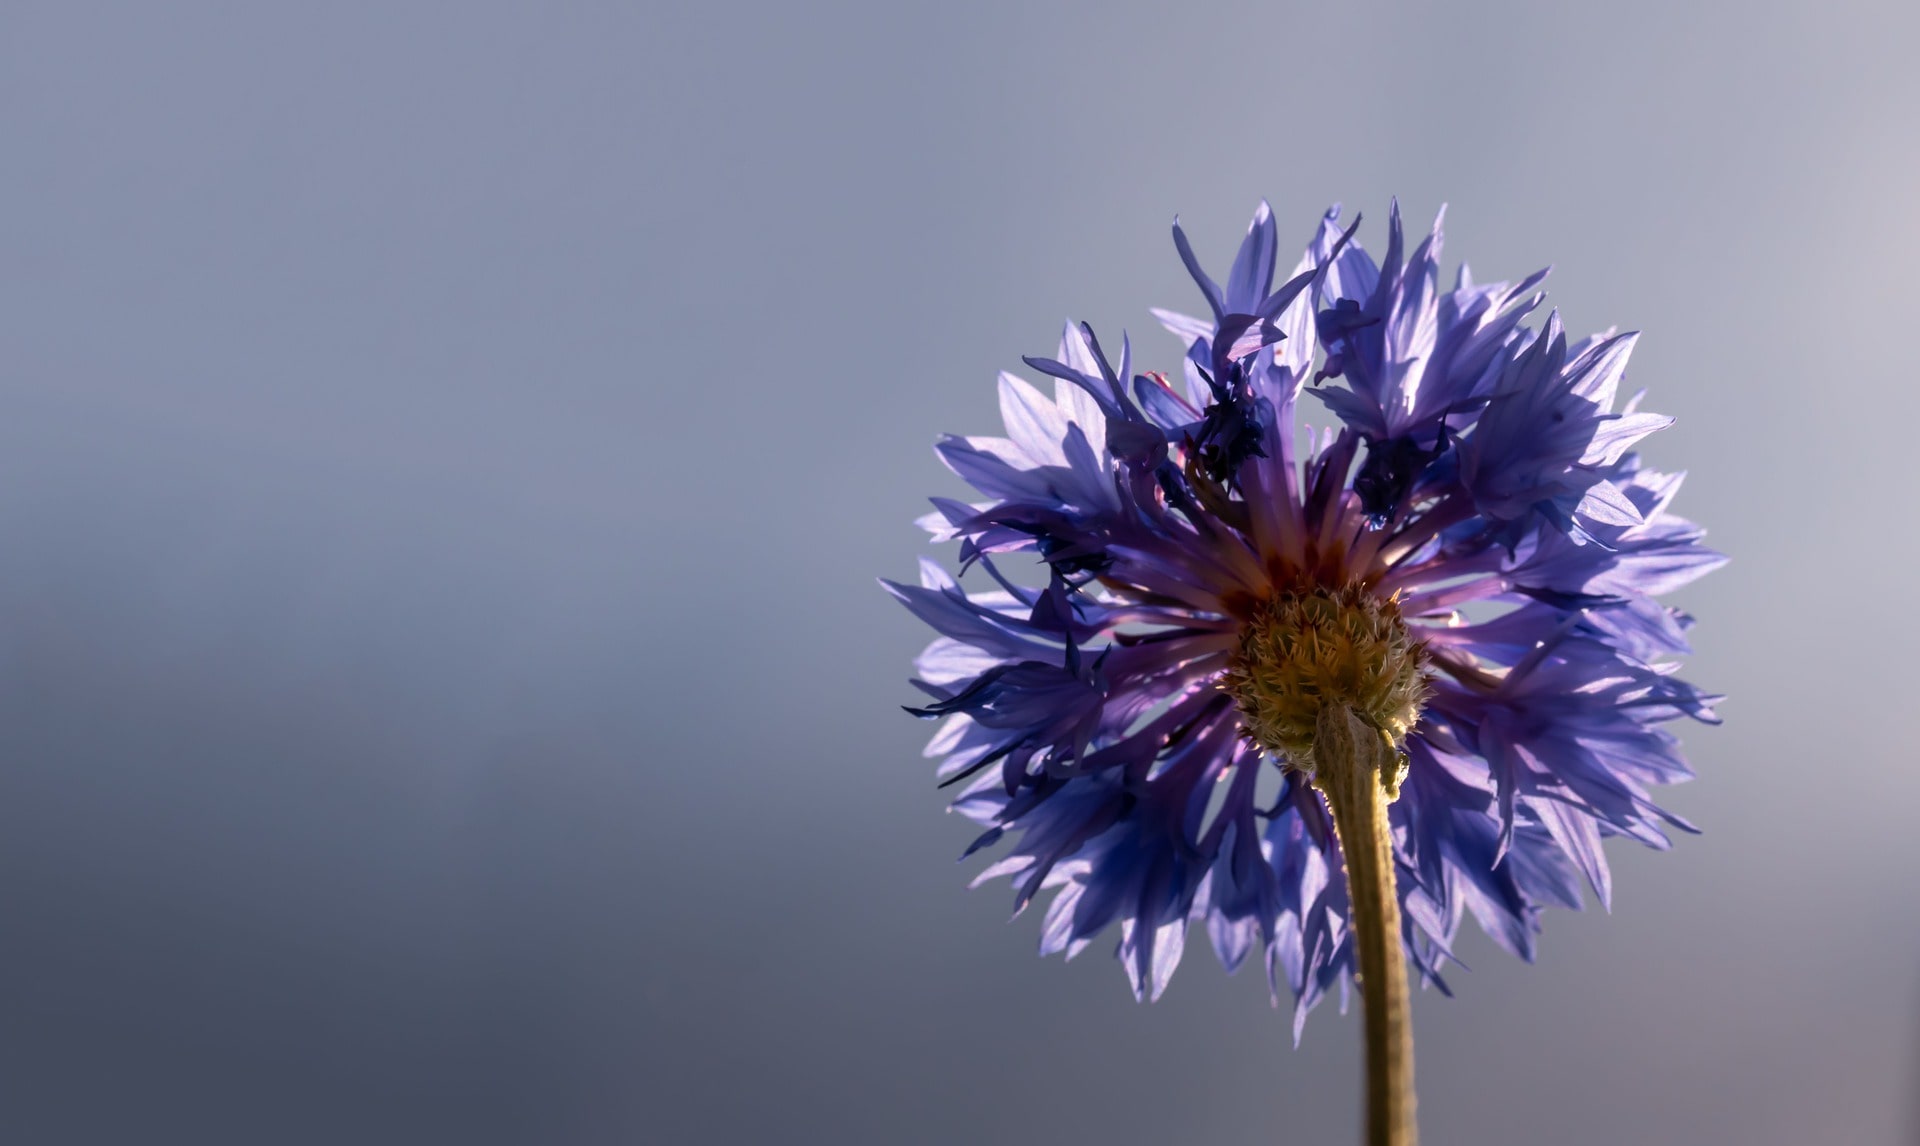 A single purple aster flower, Micah's birth flower